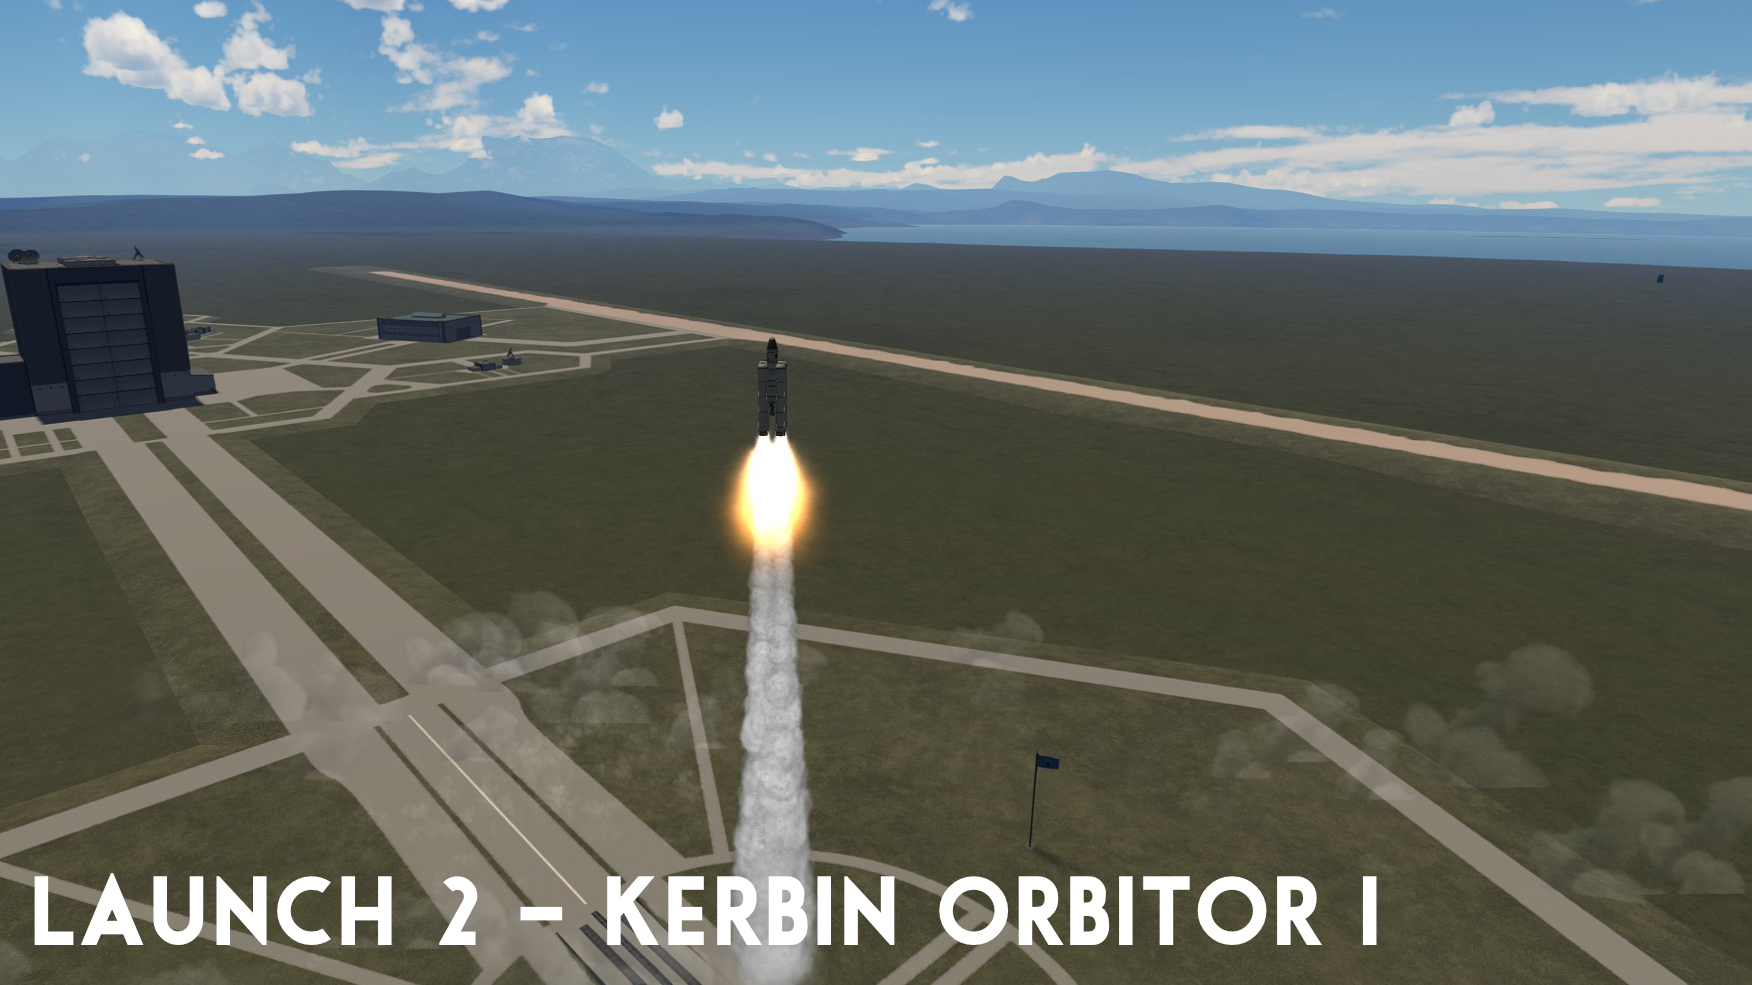 Launch 2 – Kerbin Orbitor I